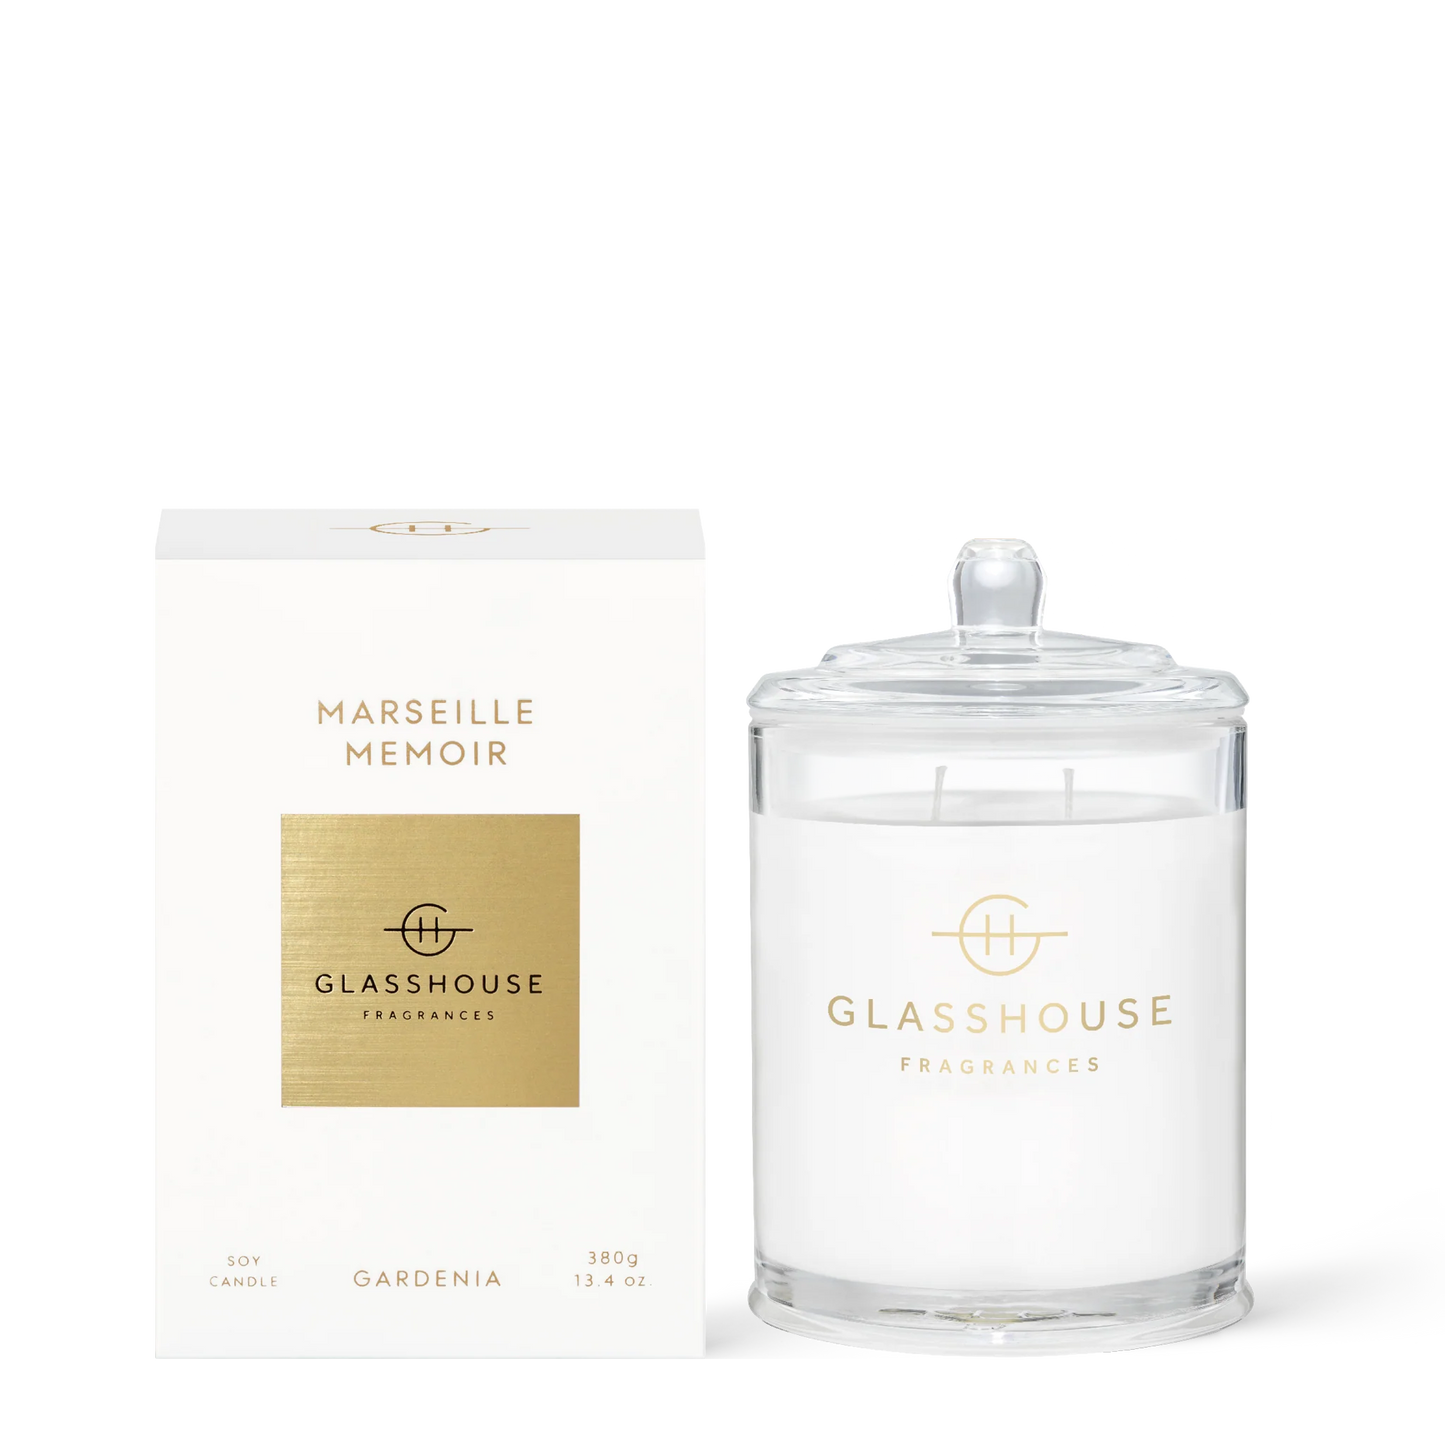 Marseille Memoir Soy Candle - Gardenia - 380g